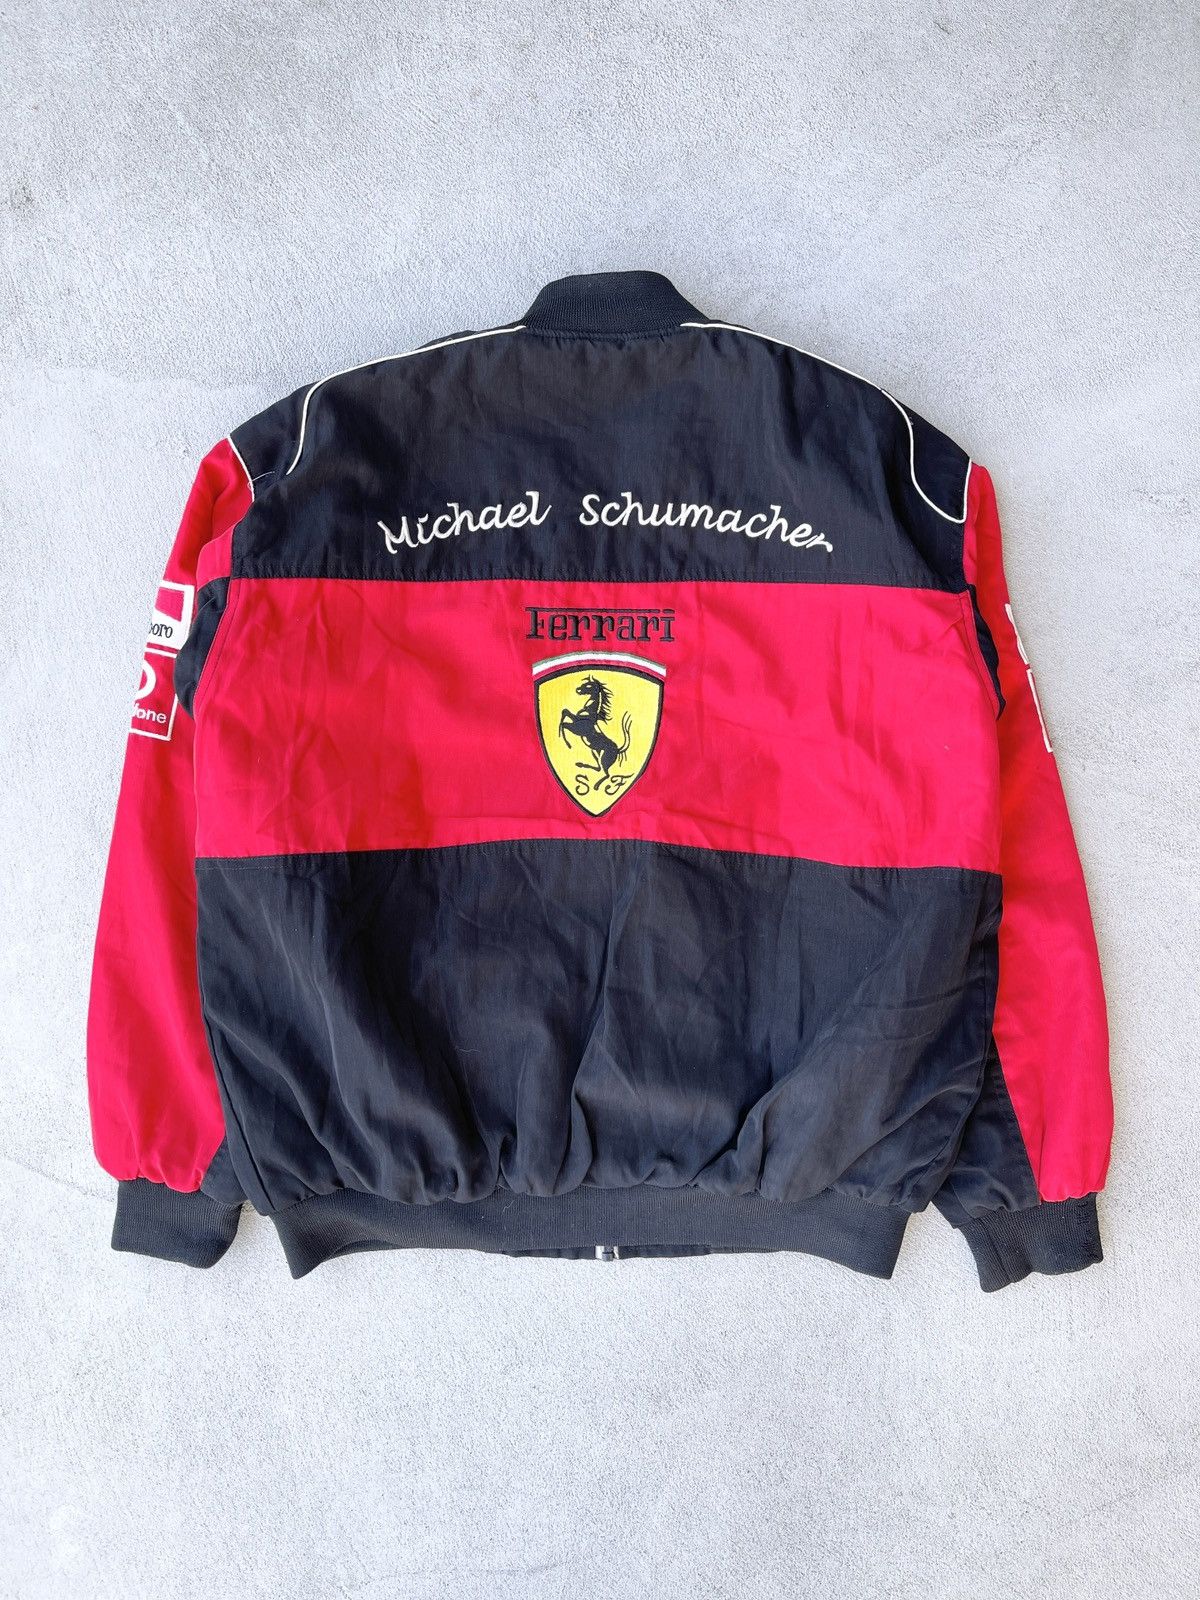 Vintage 2000s Ferrari Michael Schumacher F1 Racing Jacket - 2